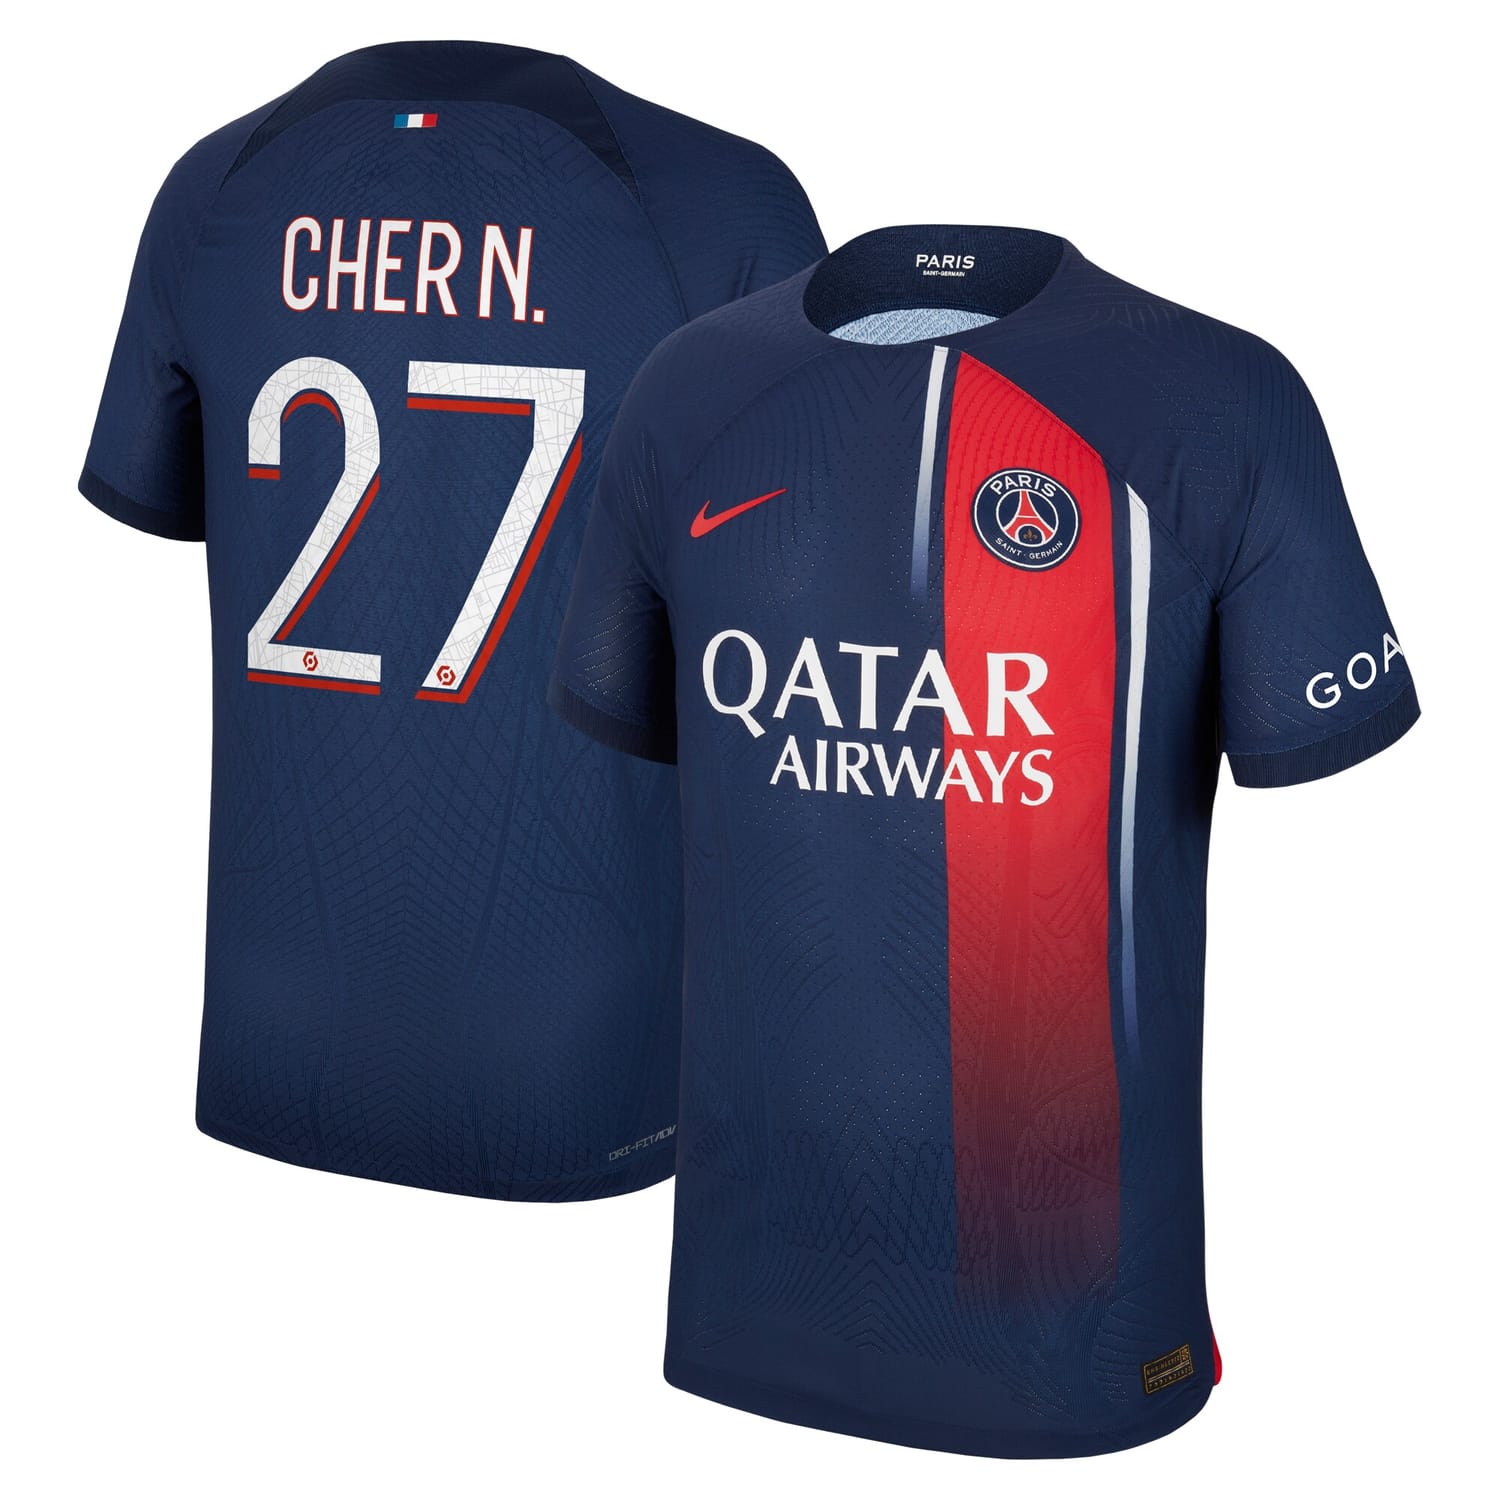 Ligue 1 Paris Saint-Germain Home Authentic Jersey Shirt 2023-24 player Cher N. 27 printing for Men